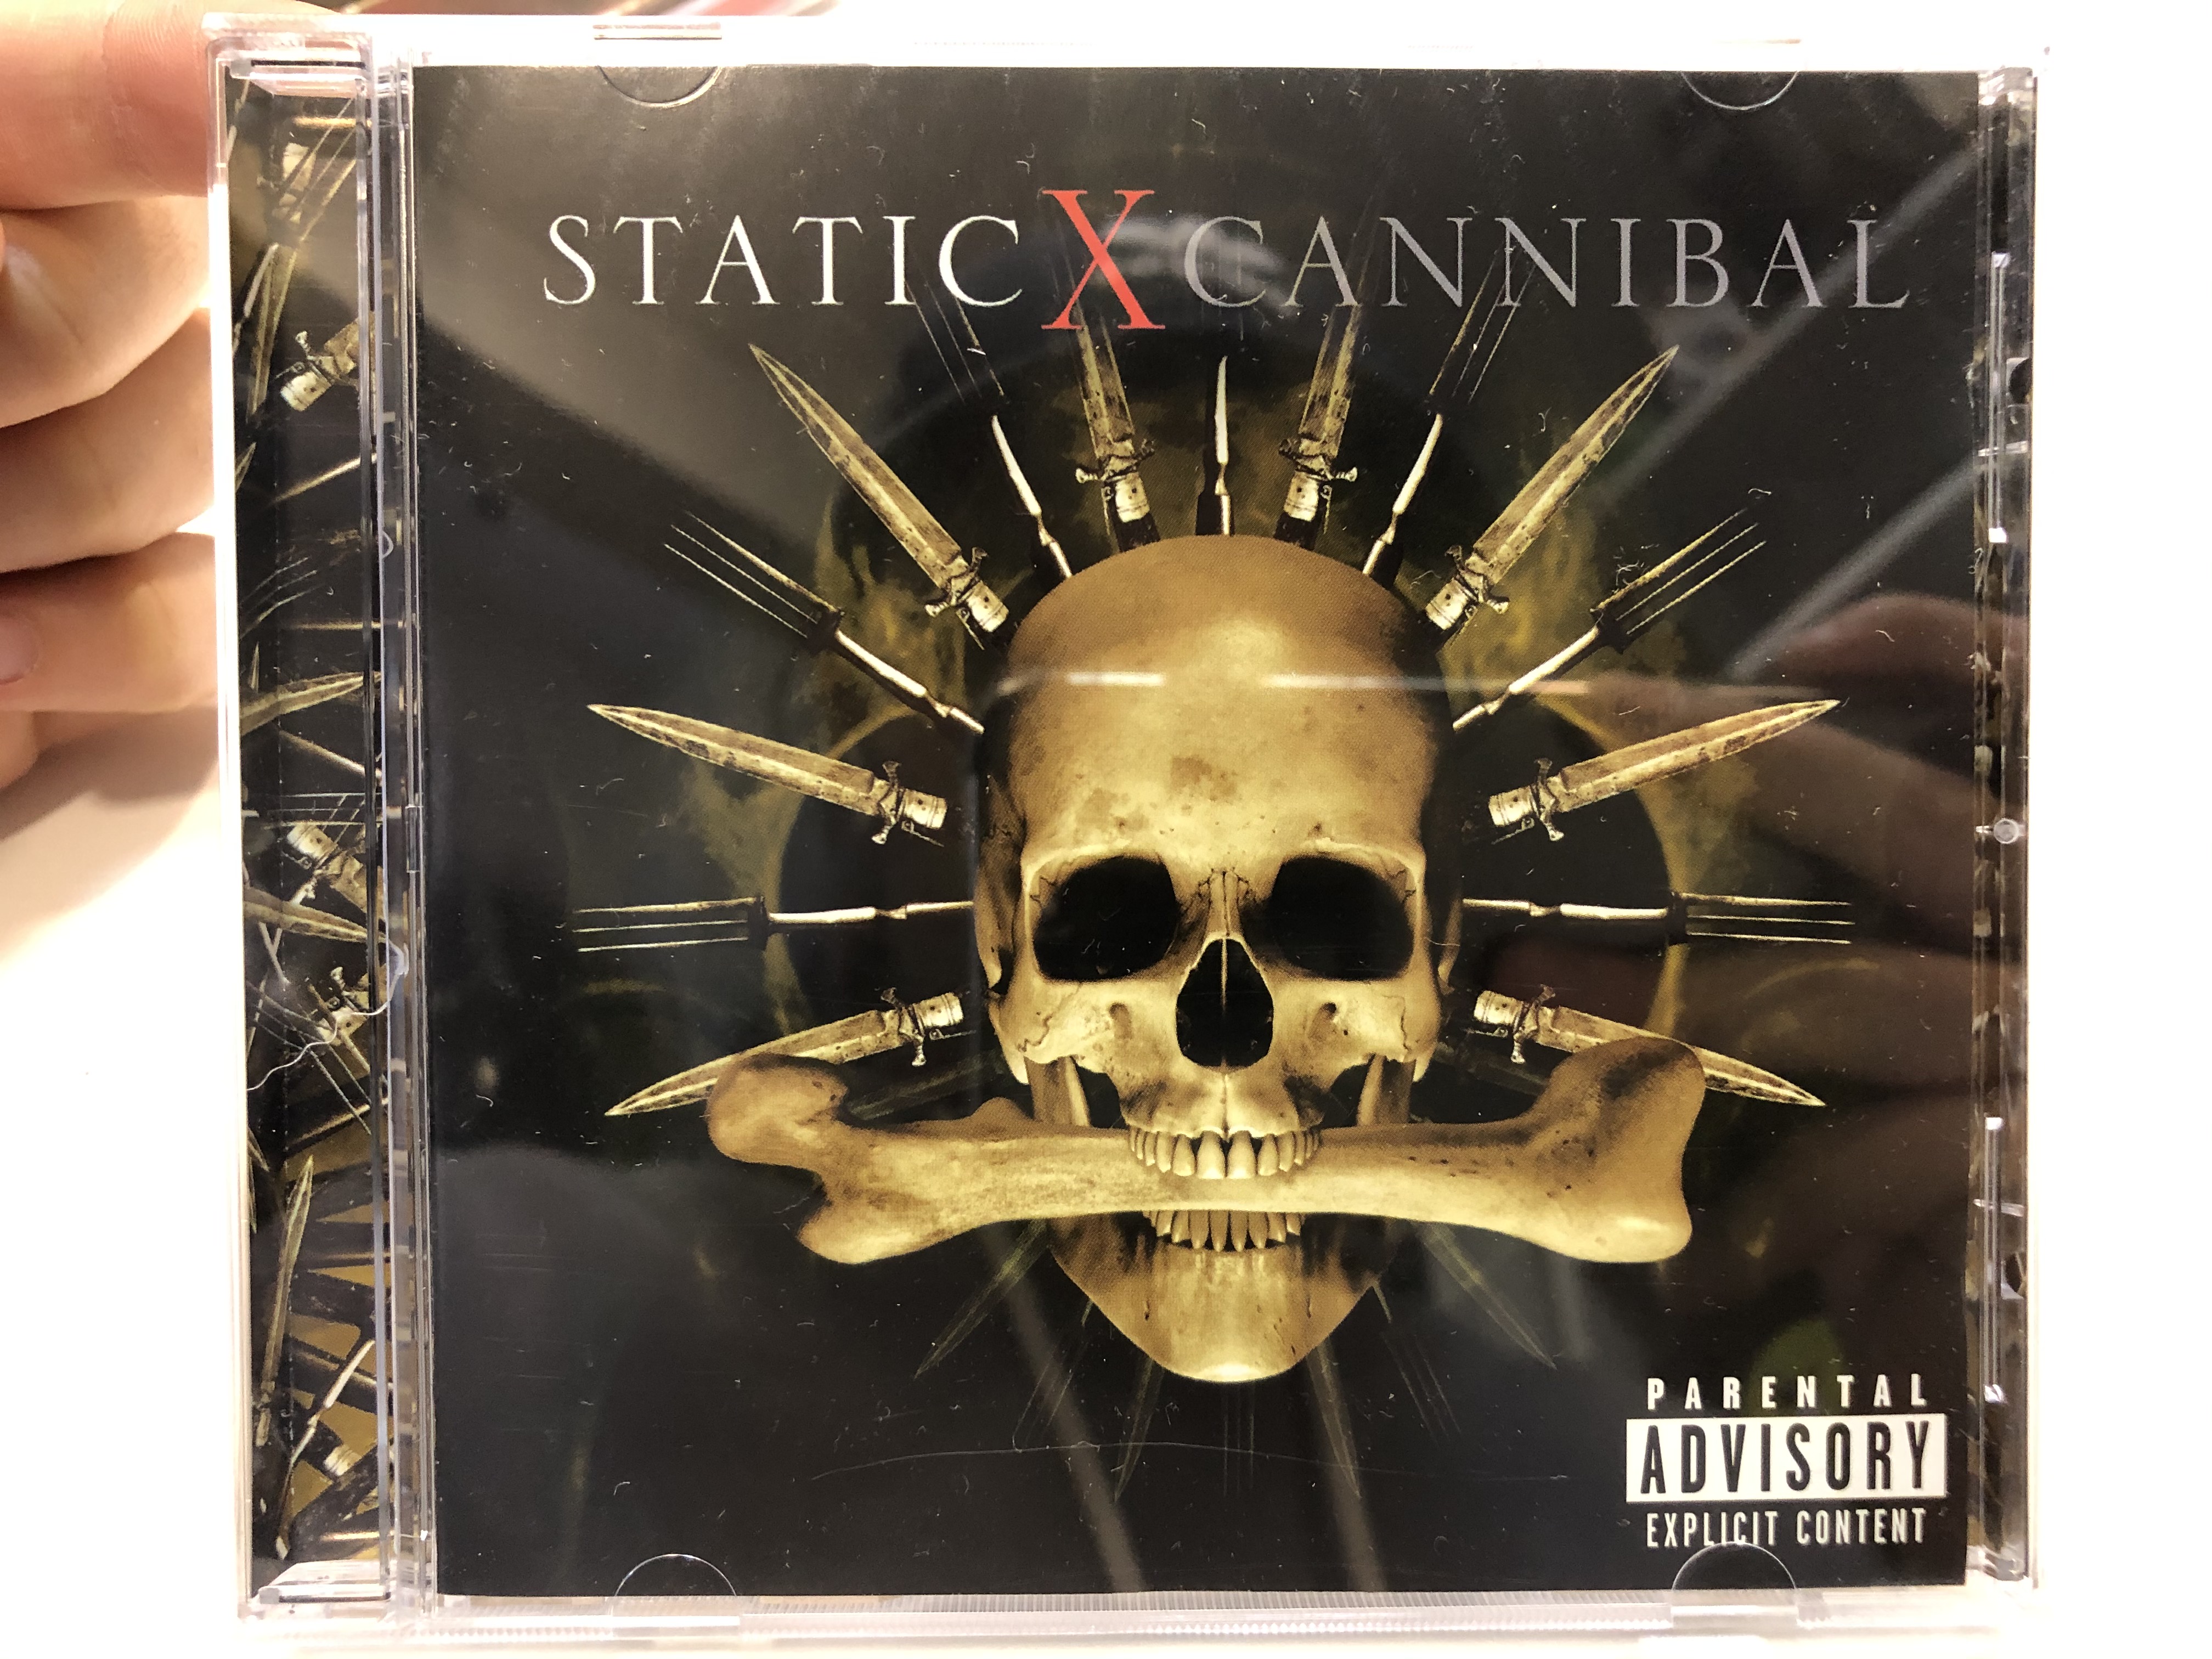 static-x-cannibal-reprise-records-audio-cd-2007-9362-49992-4-1-.jpg